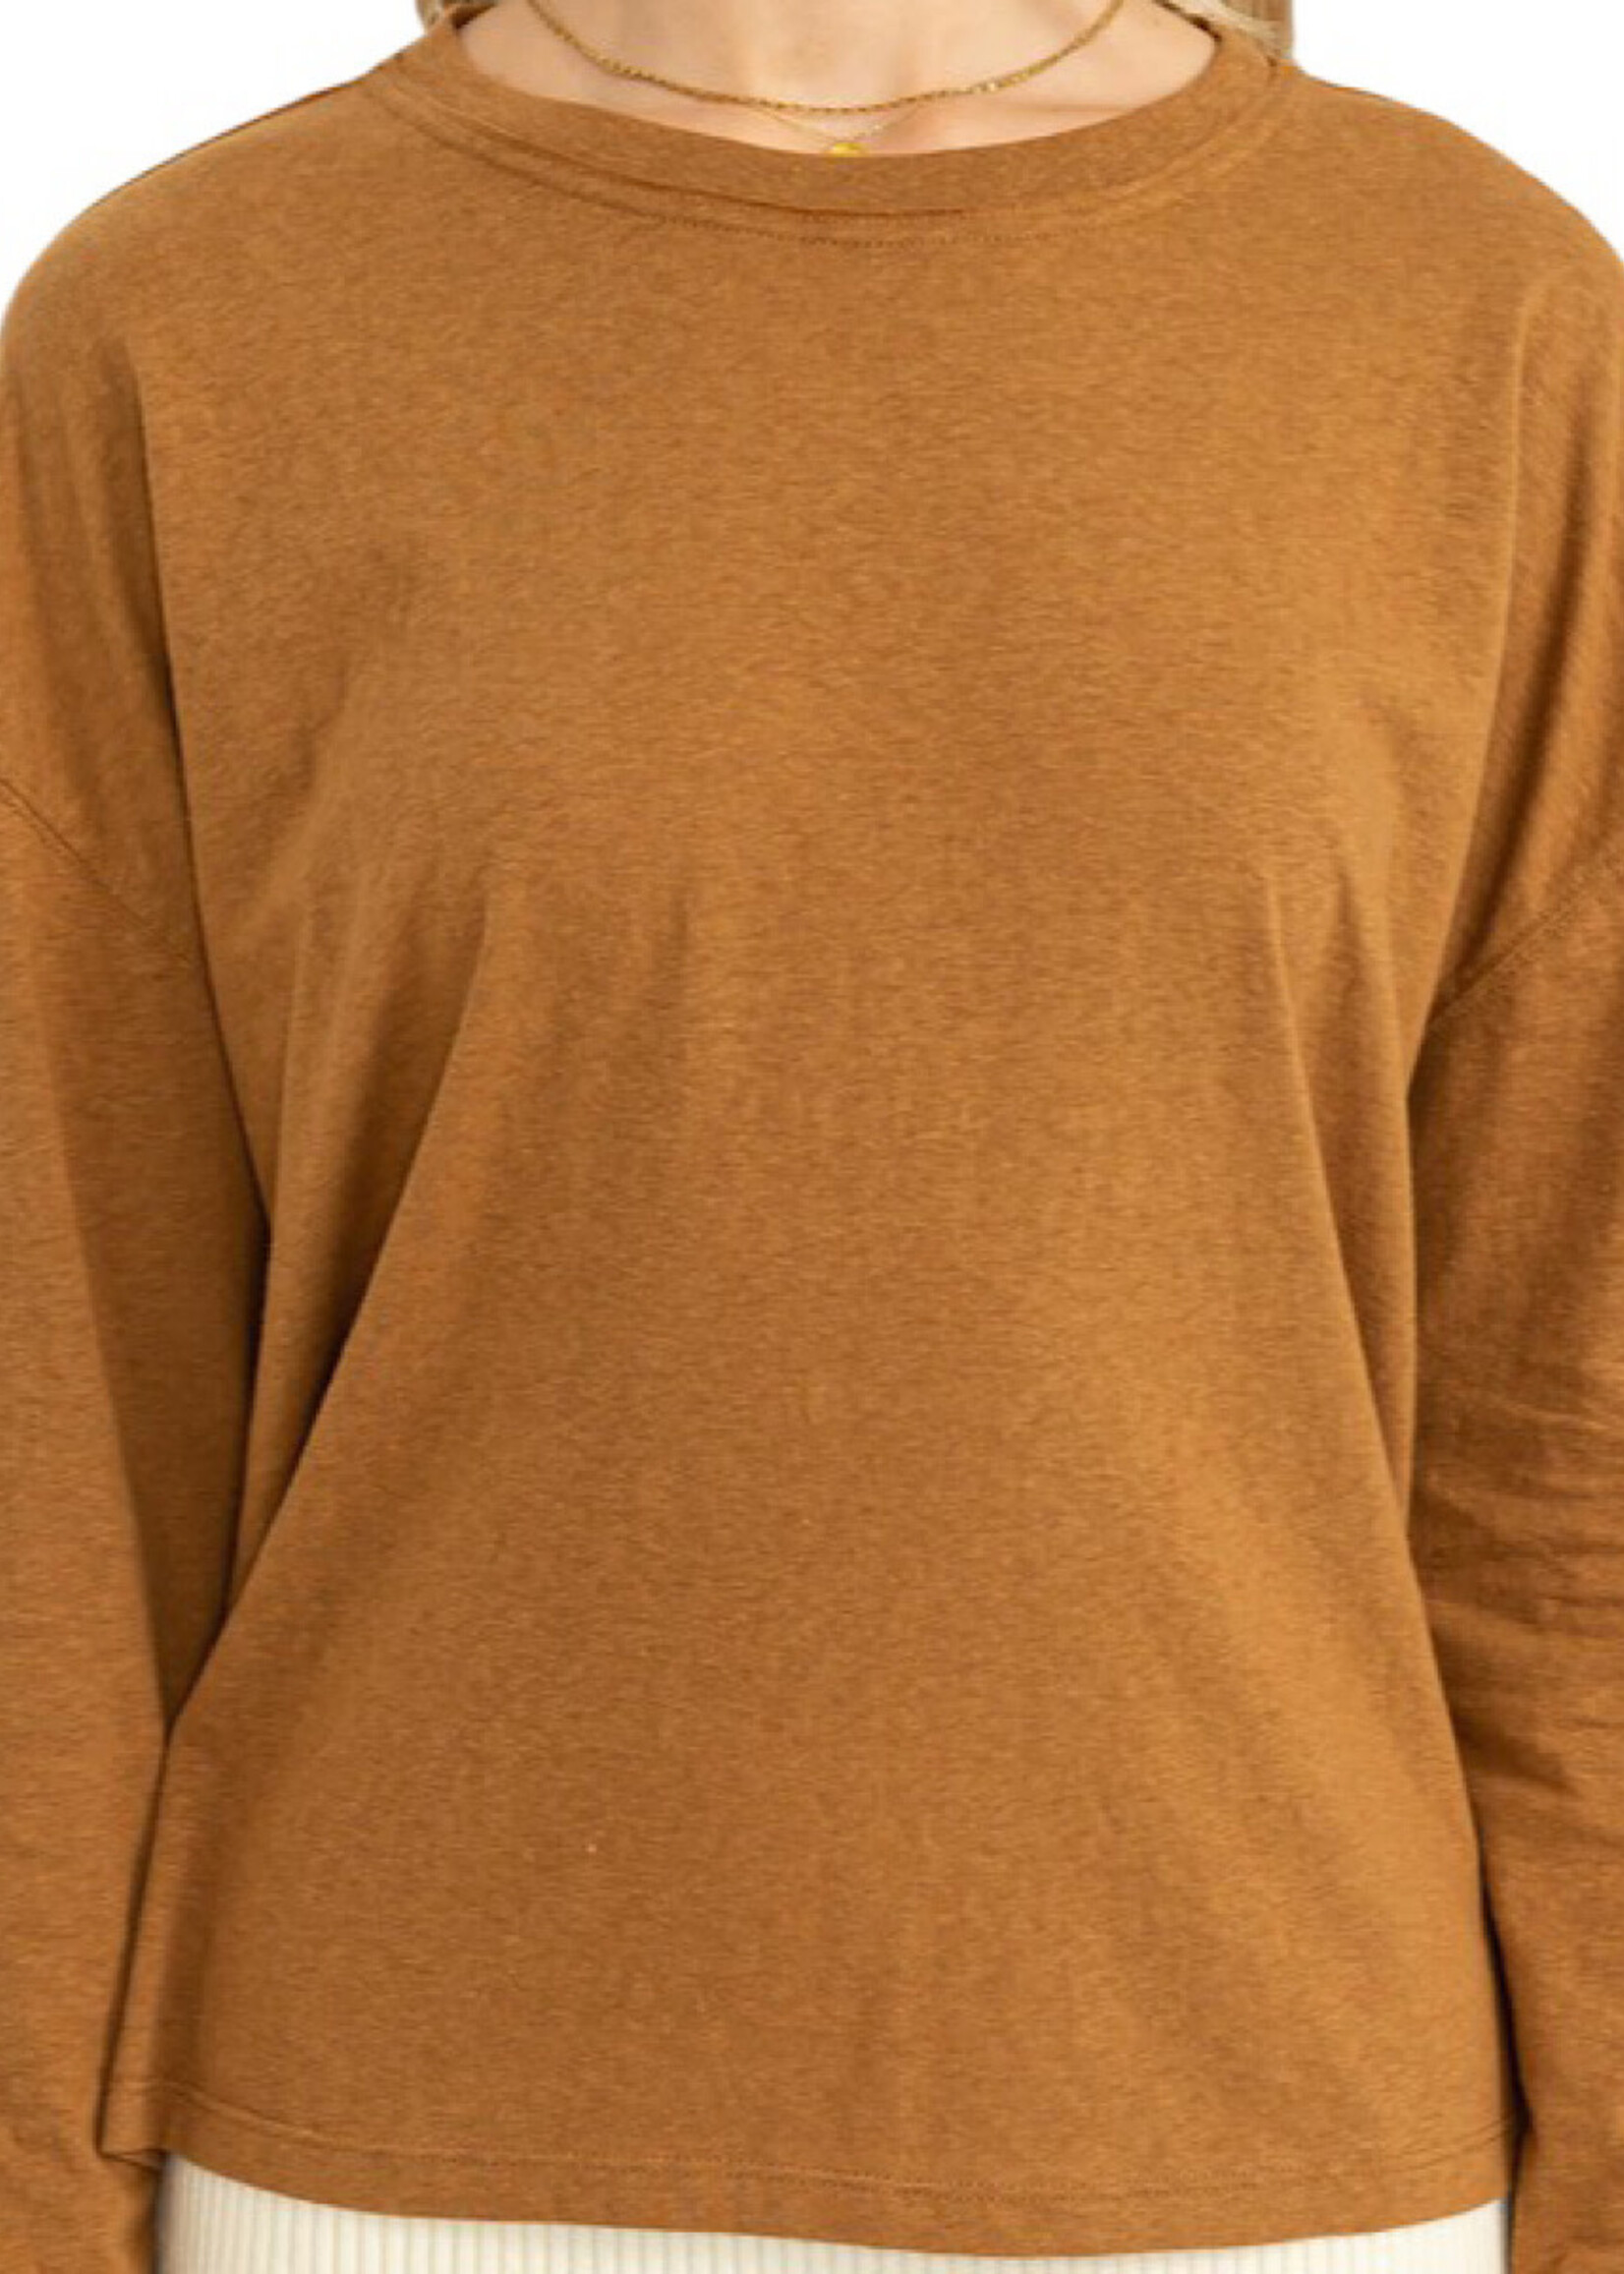 Brown Oversized T-Shirt